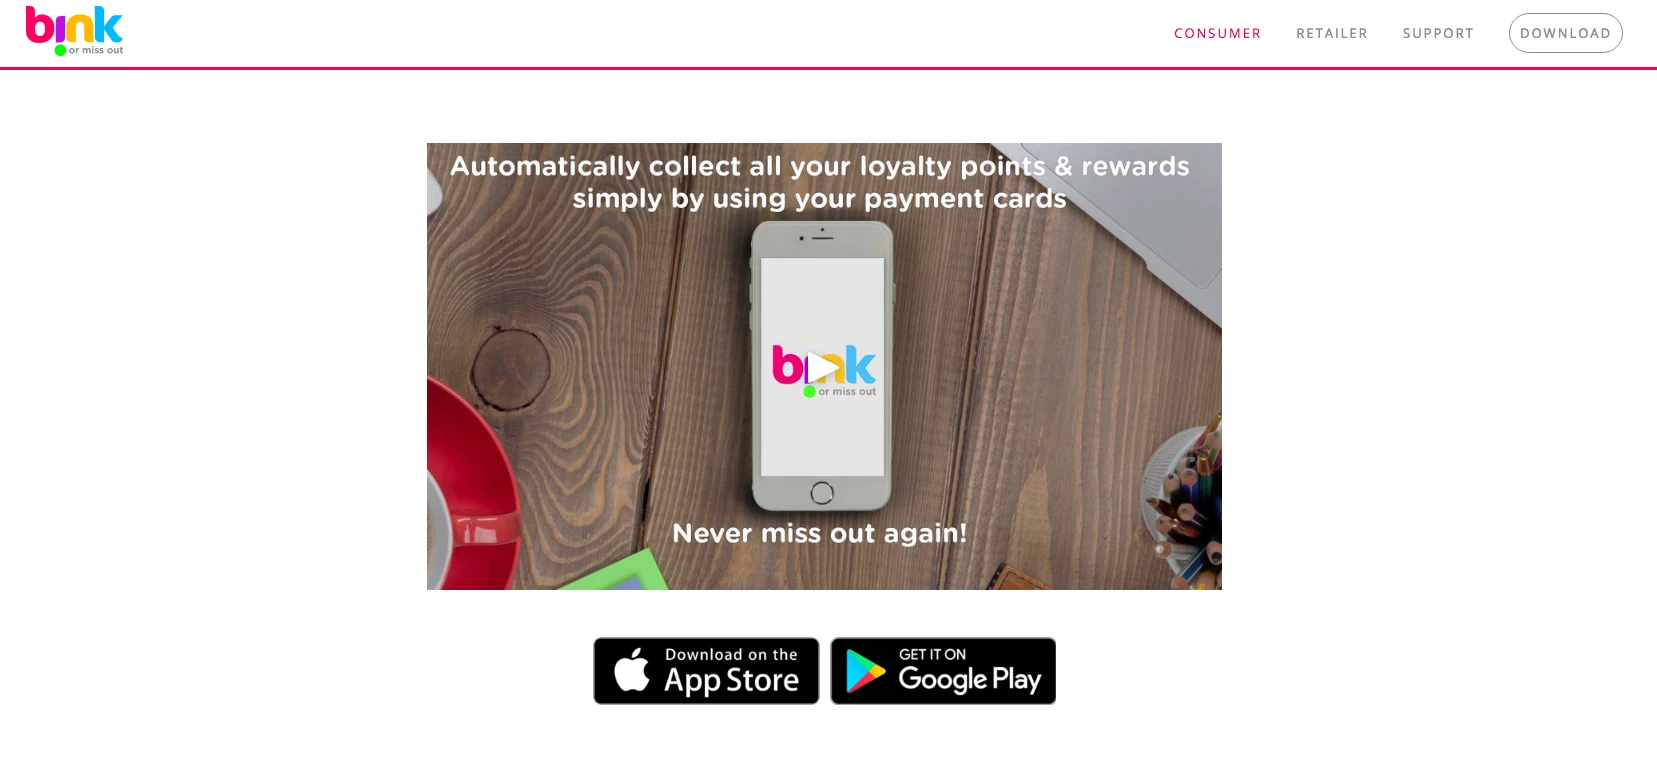 Loyalty app Bink has closed an interim funding round of £2m.